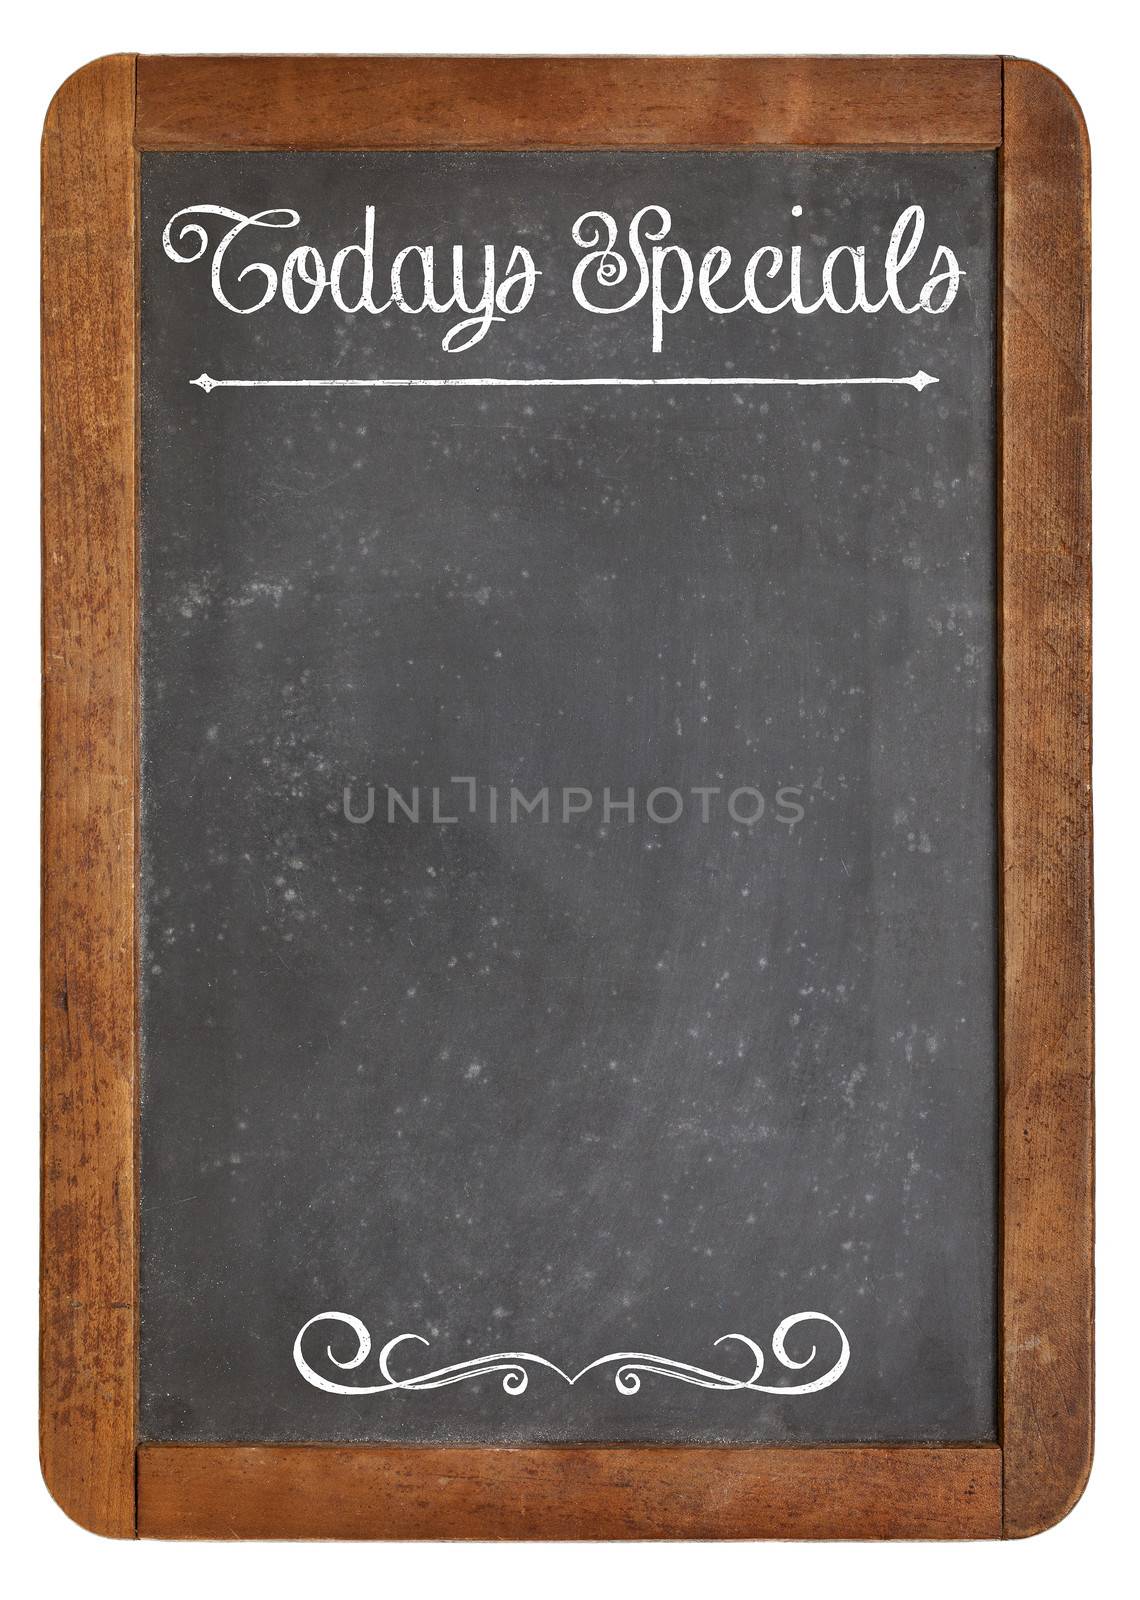 Today Specials on blackboard by PixelsAway